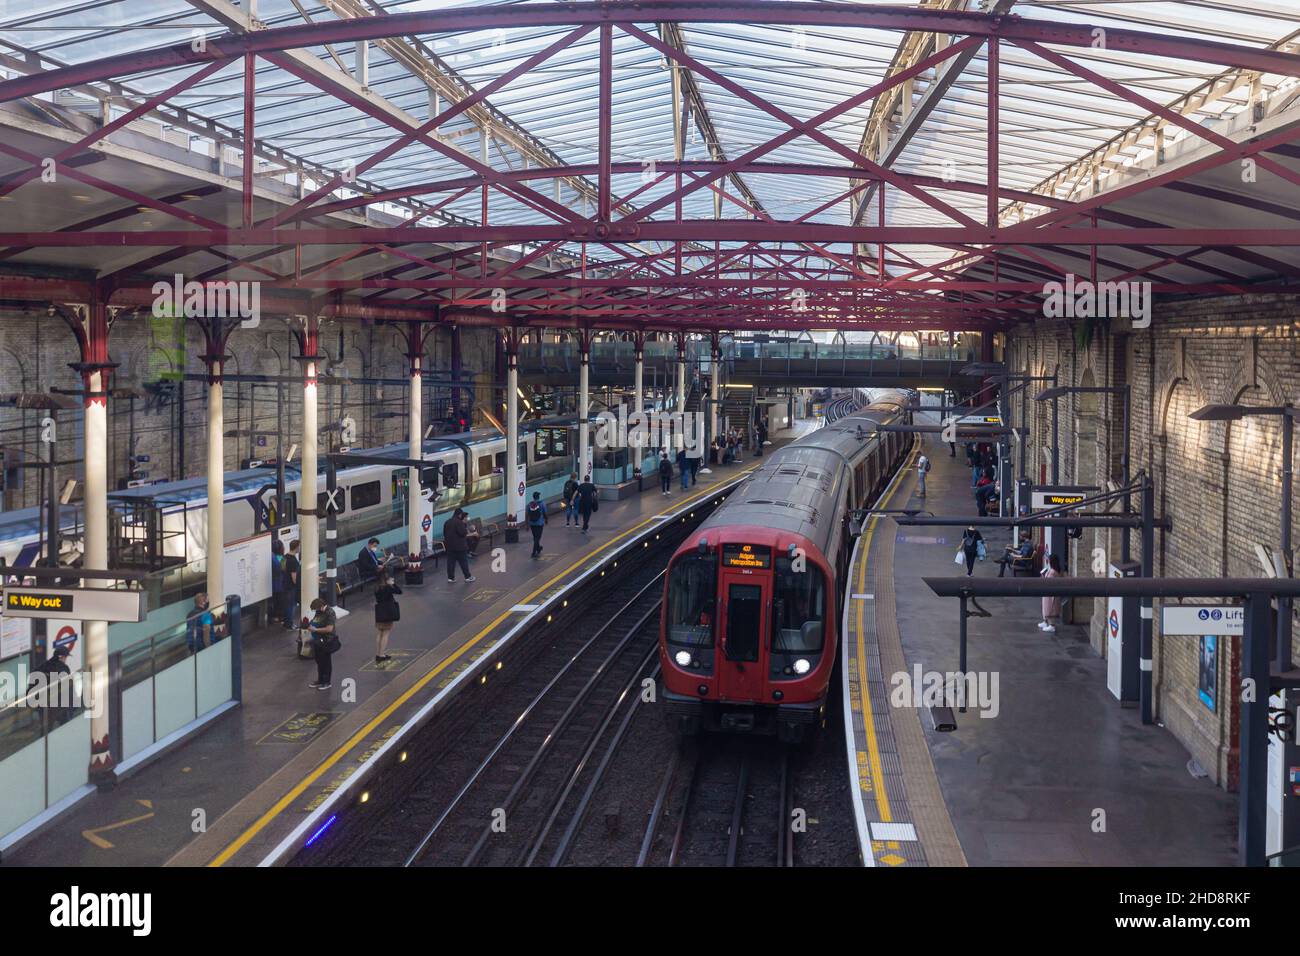 A train arrives at the sub-surface Underground platforms at Farringdon station. London, UK Stock Photo